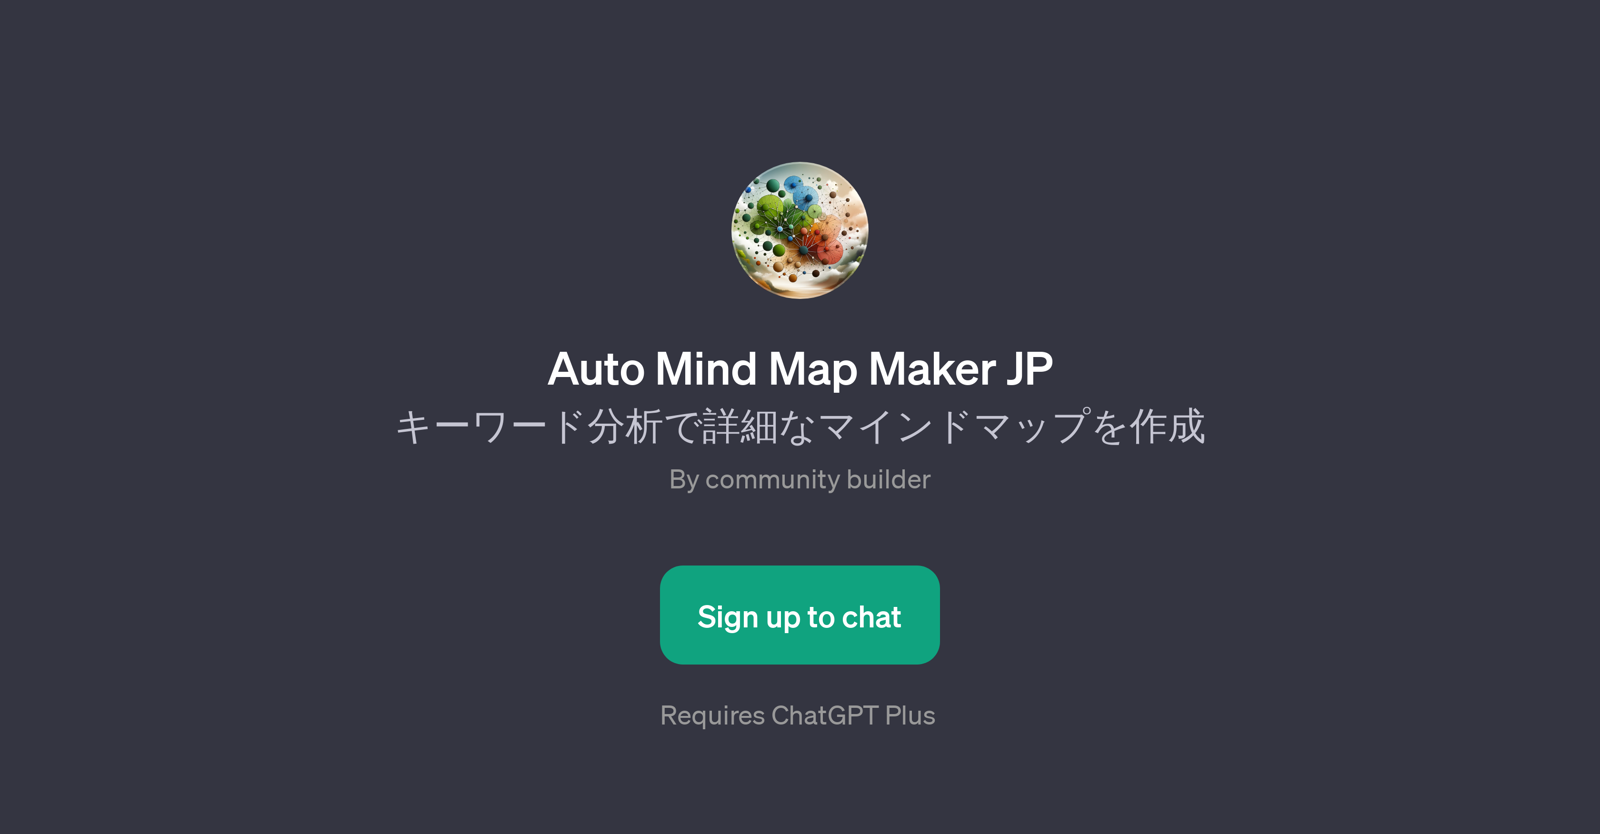 Auto Mind Map Maker JP website